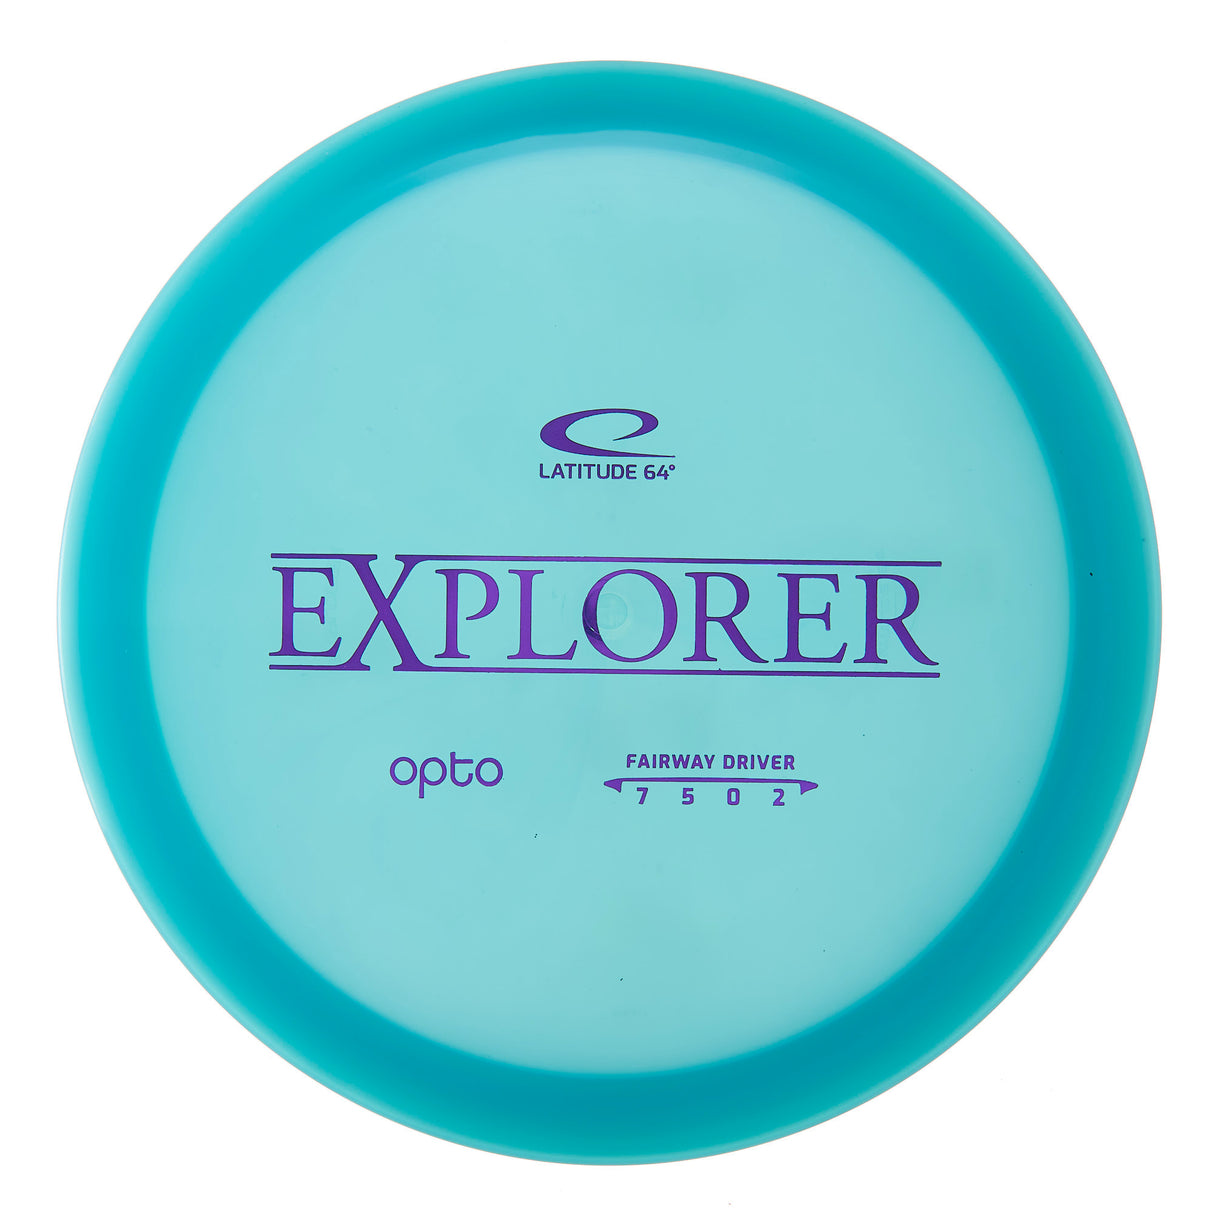 Latitude 64 Explorer - Opto 174g | Style 0008